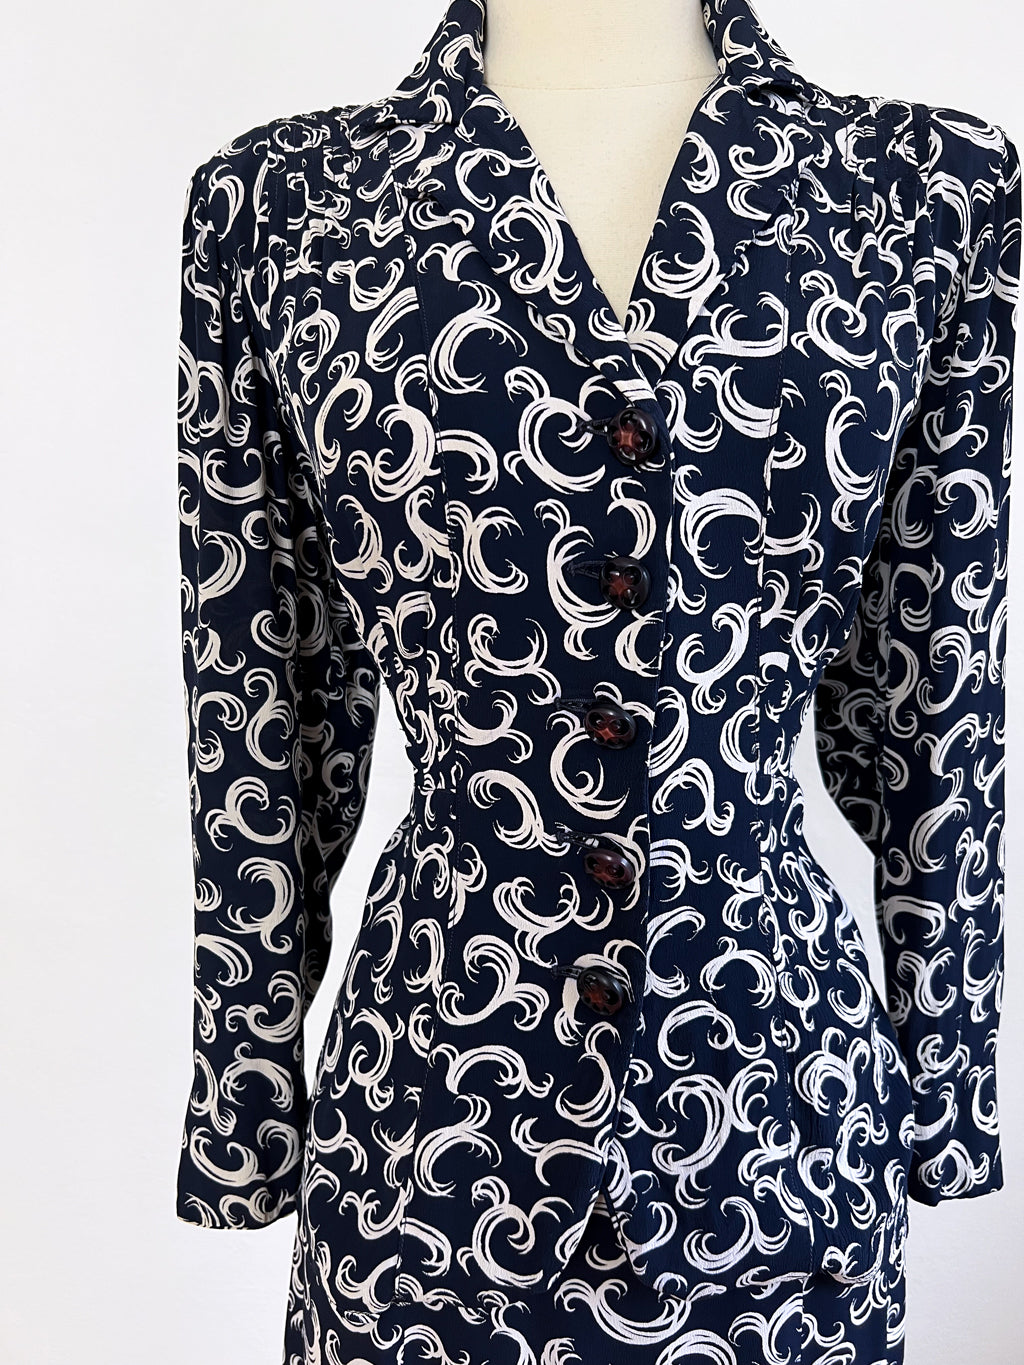 Vintage 1940s Rayon Crepe Princess Dress Suit - VOLUP Sophisticated Designer Feather Frond Print Jacket + Skirt w FAB Buttons Size L - XL